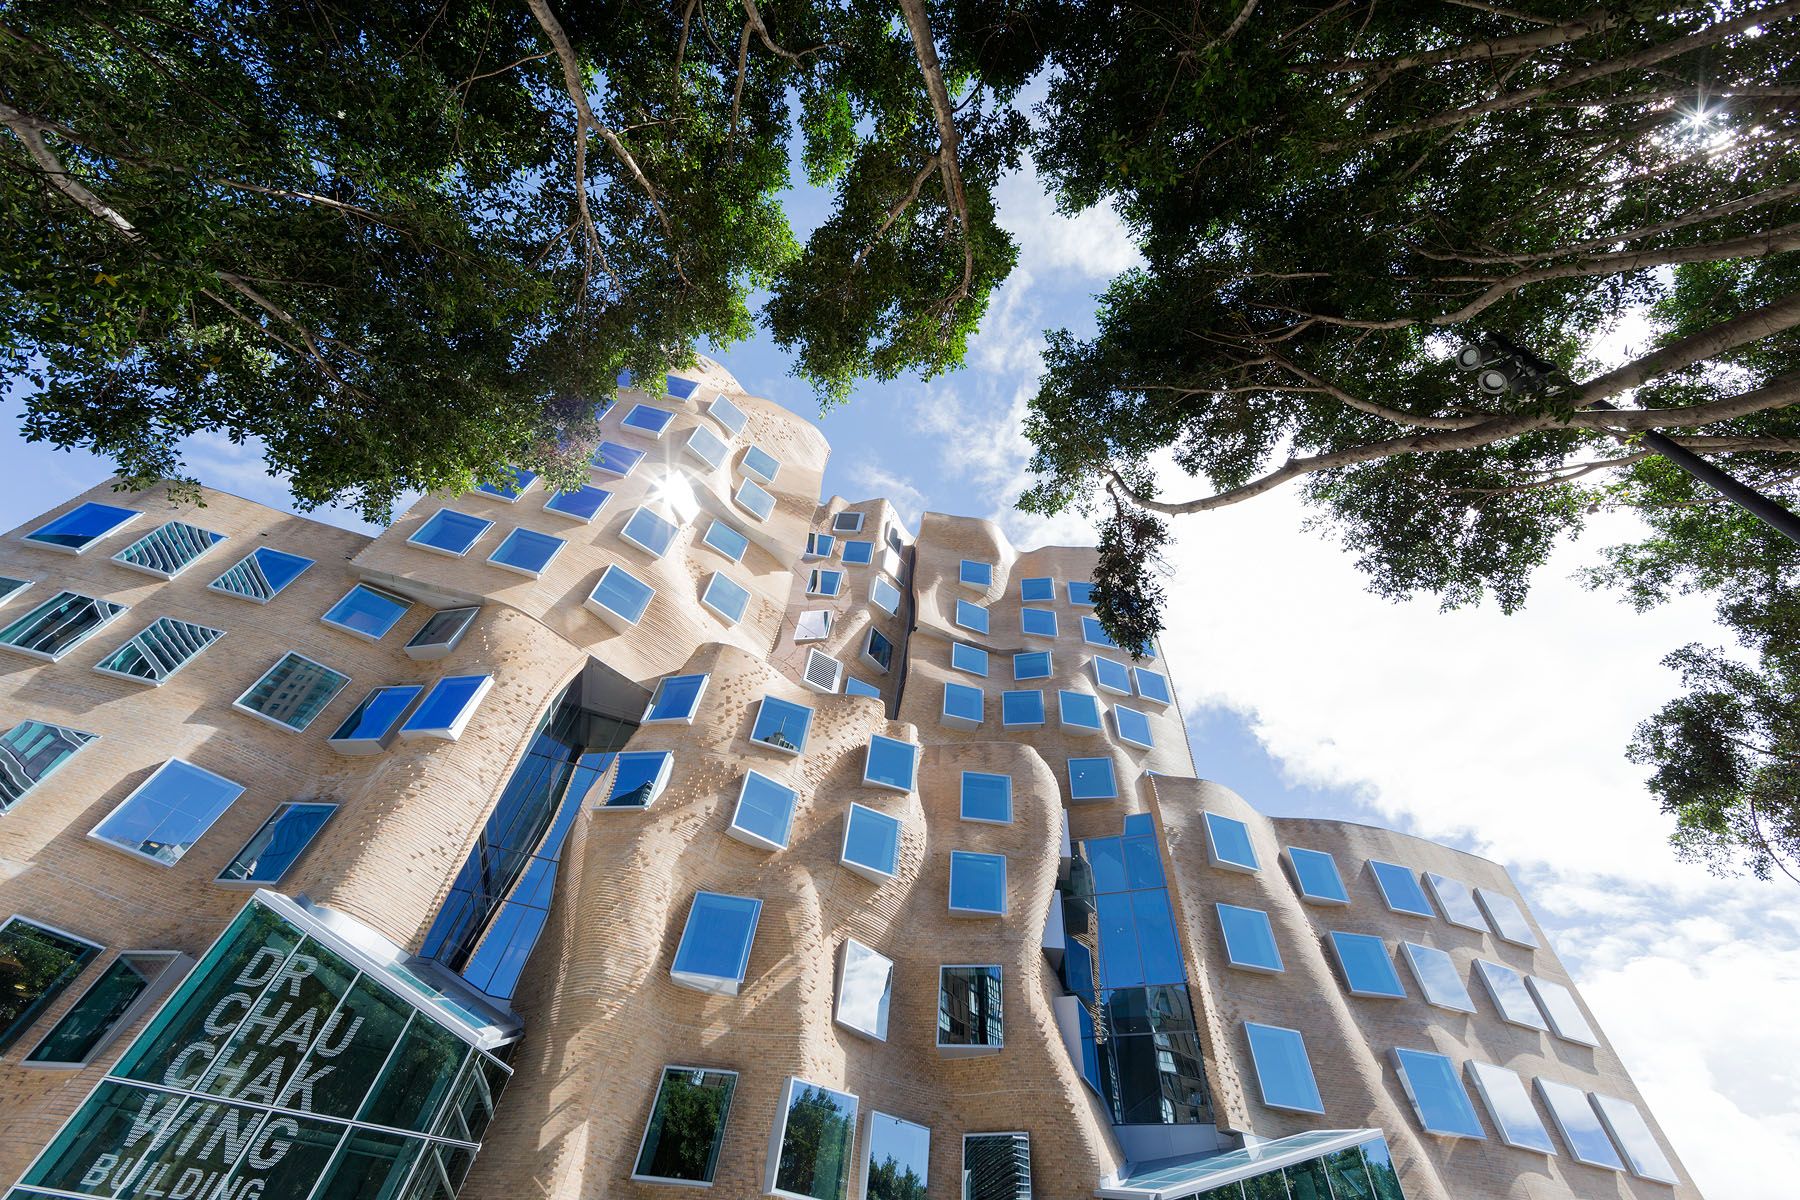 University of Technology Sydney, Australia – Frank Gehry